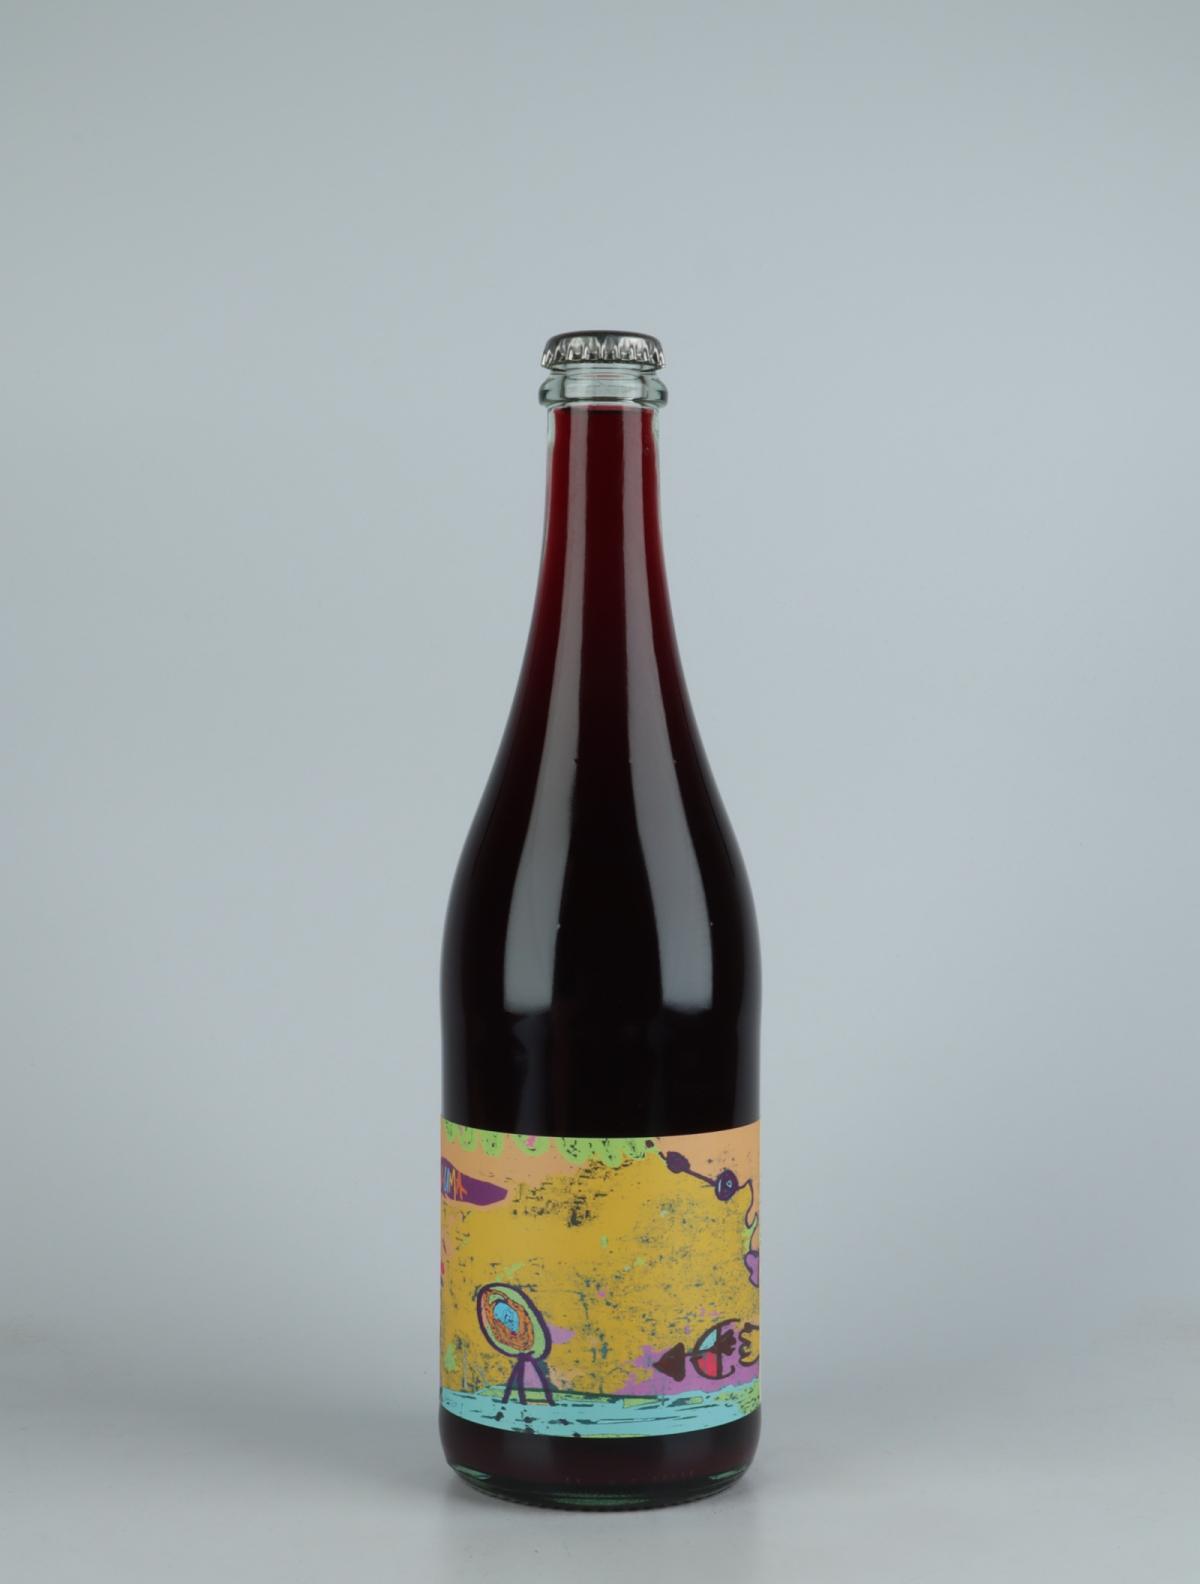 A bottle 2021 Audrey's Fairygarden Red wine from Jauma, Adelaide Hills in 